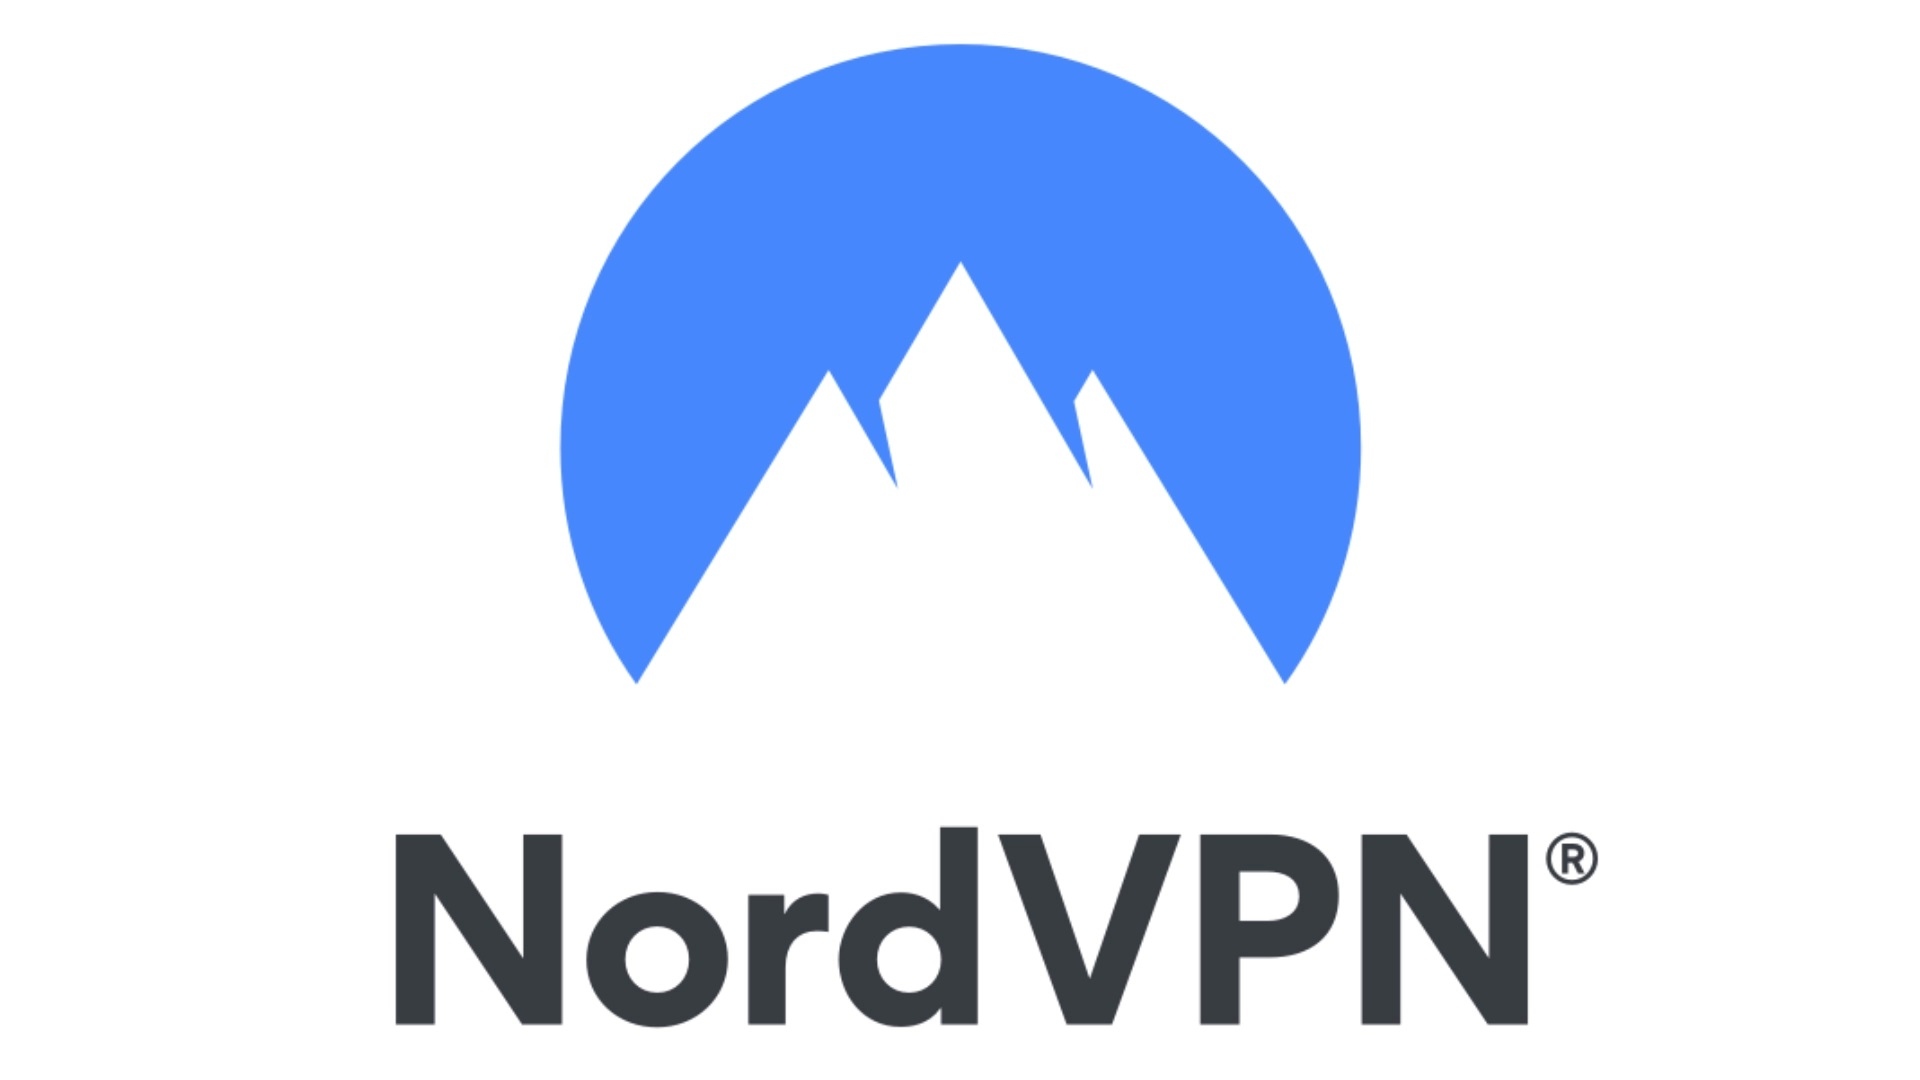 Best Firefox VPN: NordVPN. Image shows the company logo.